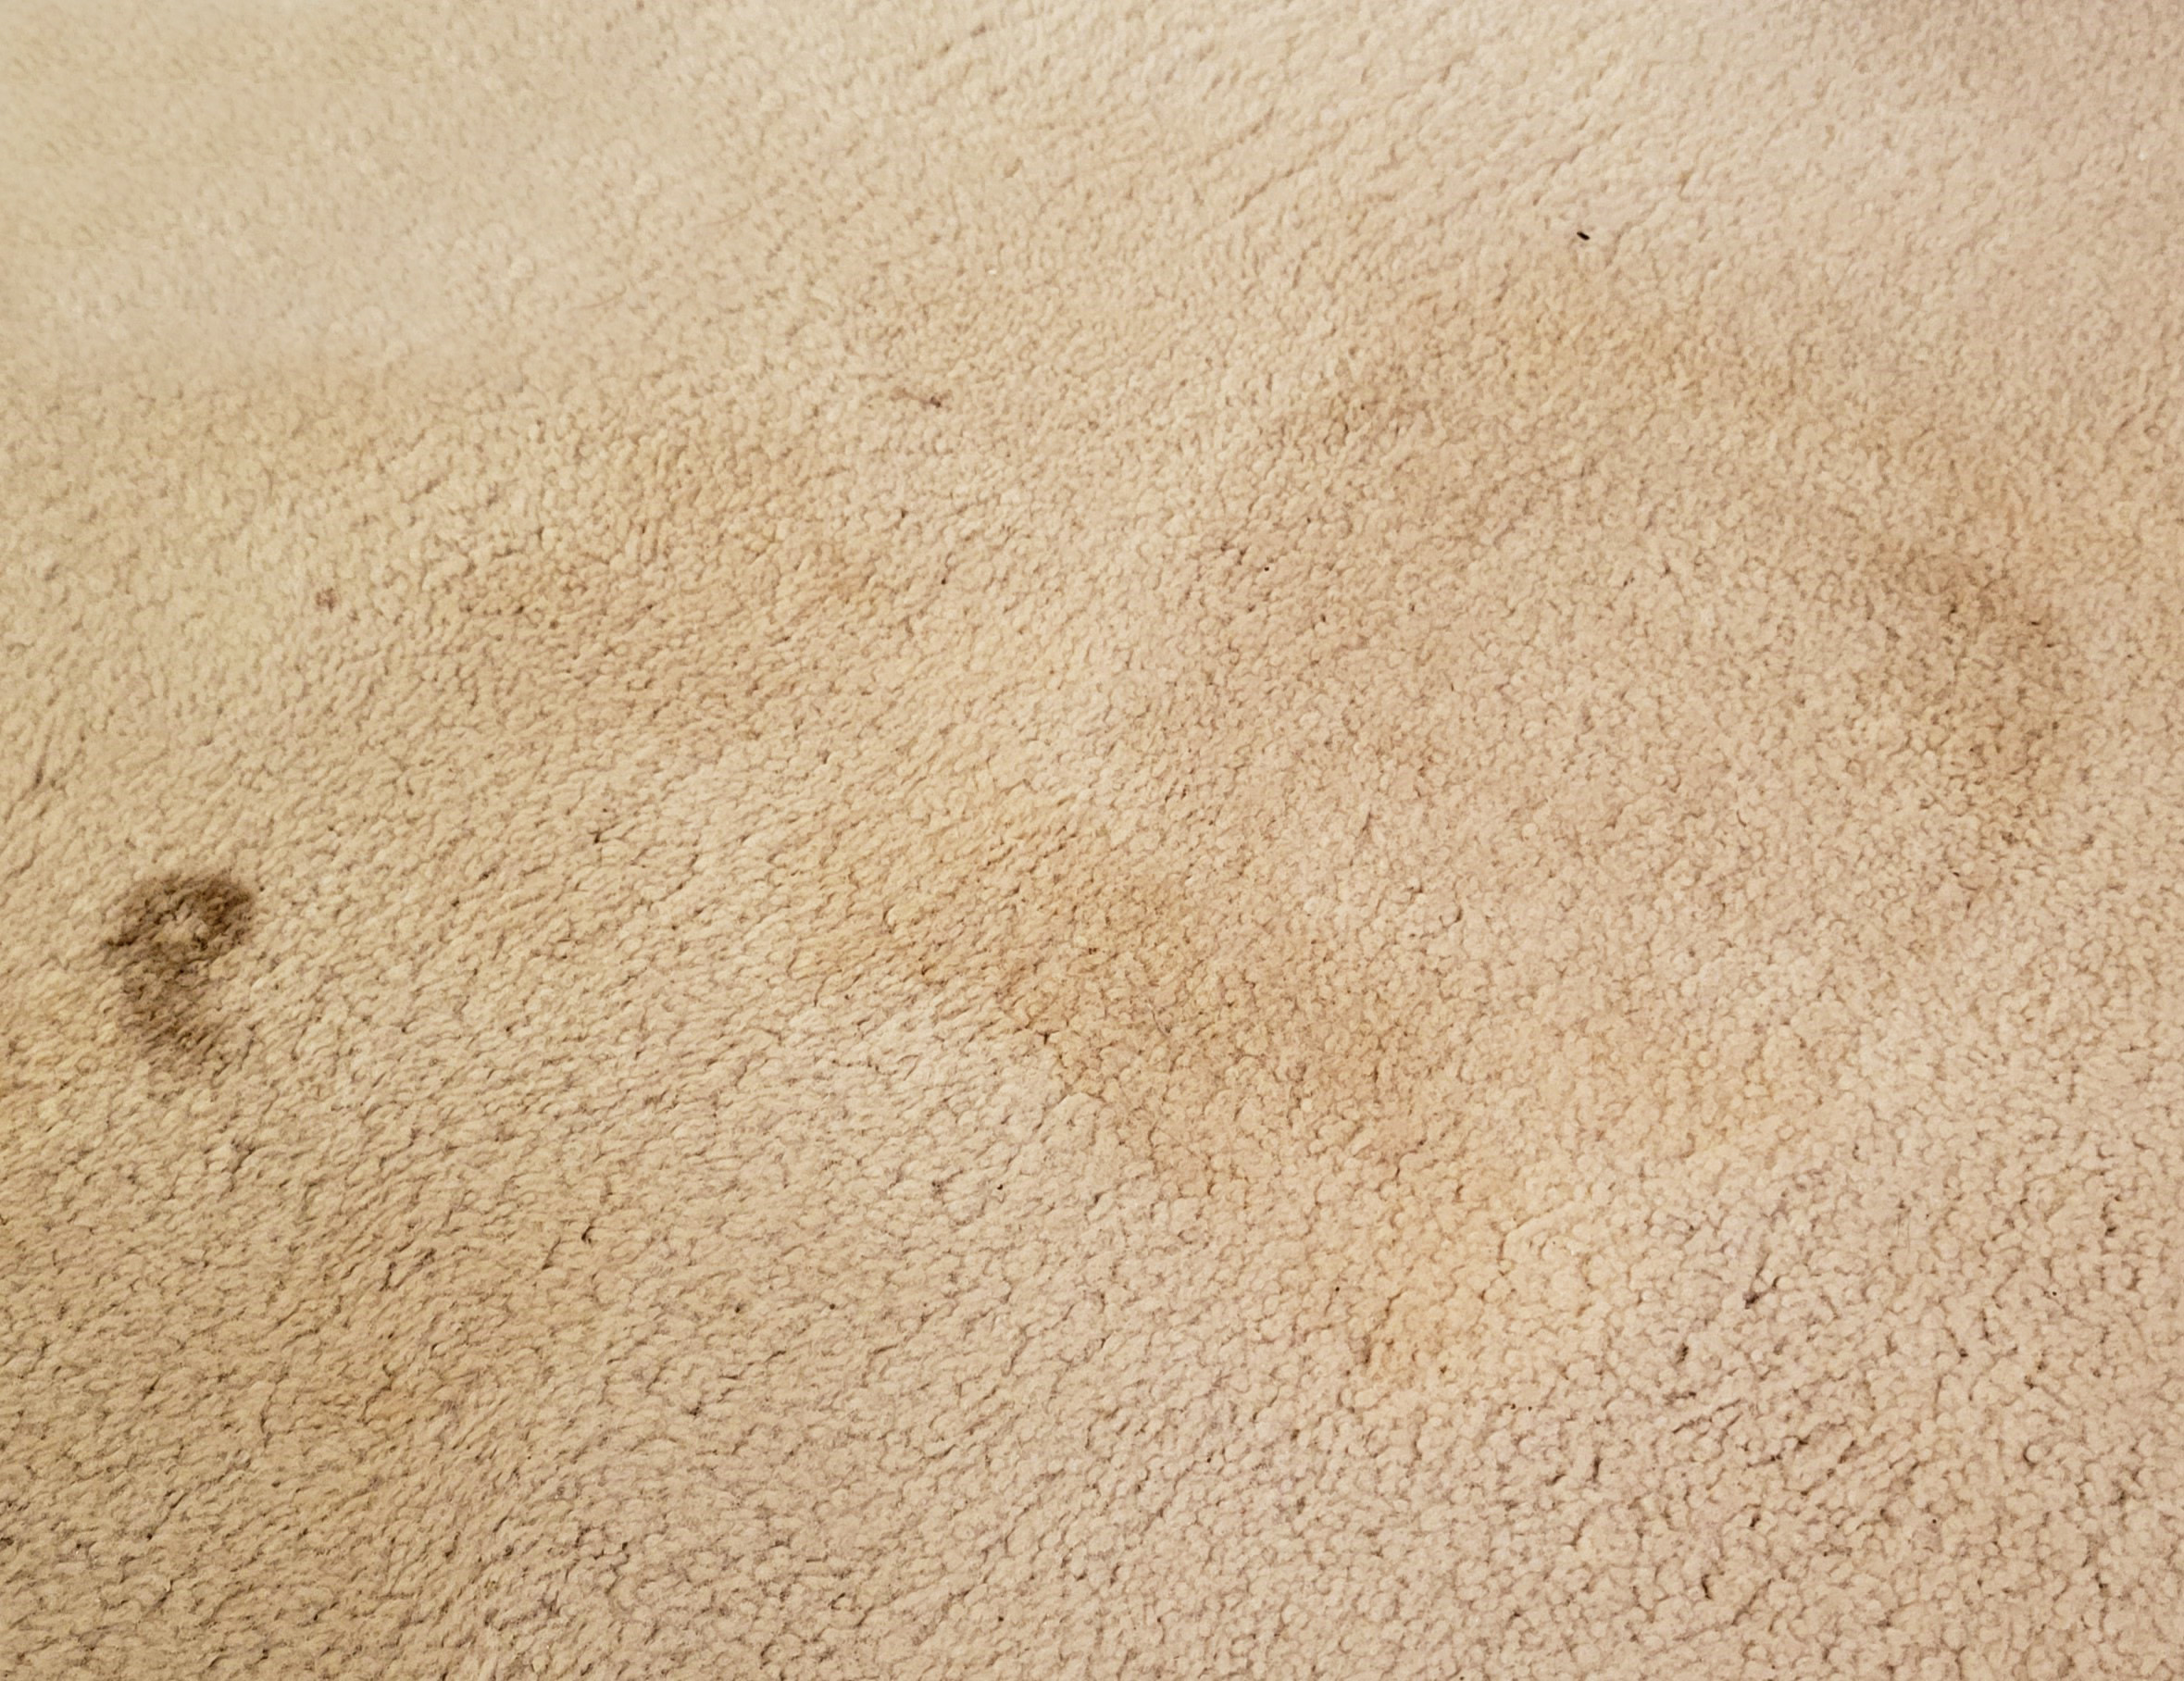 Carpet Shampooing South Barrington Illinois